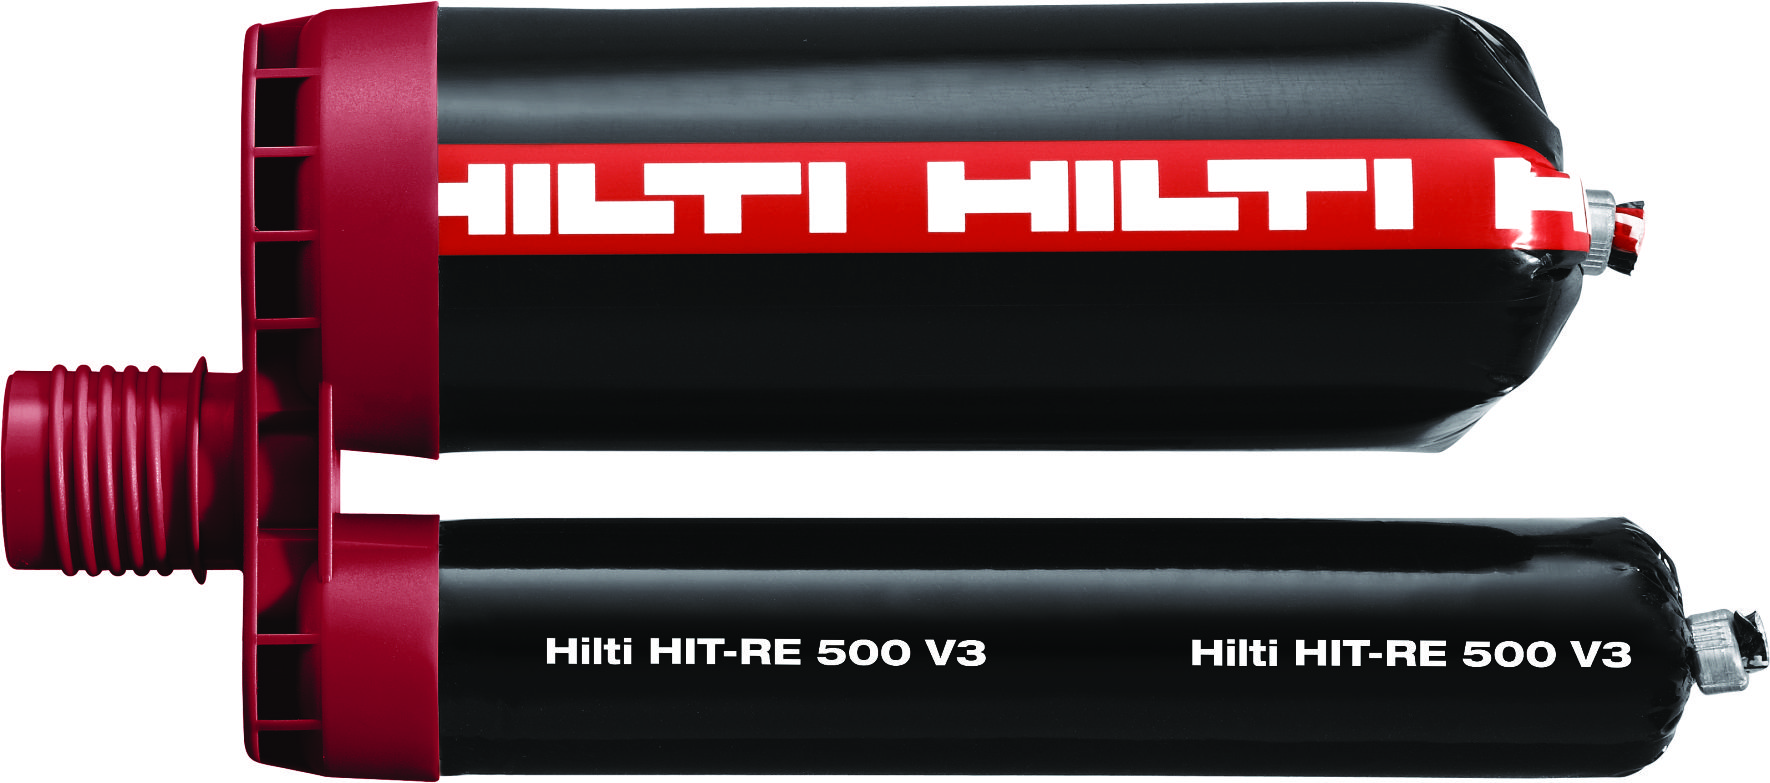 Hilti HIT-RE 500 V3